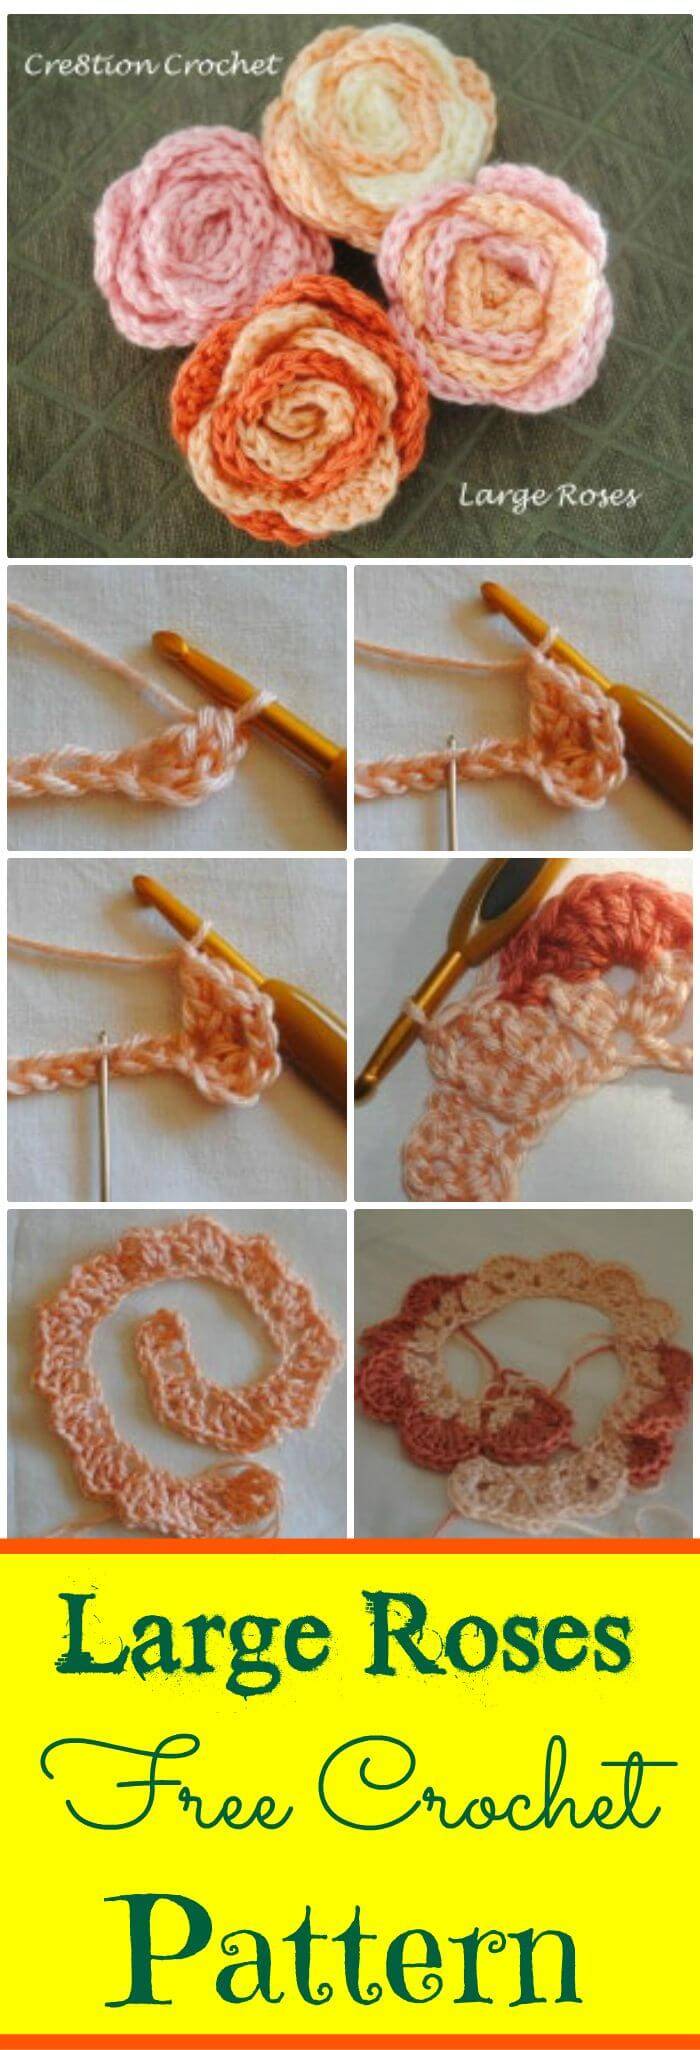 DIY Large Roses Free Crochet Pattern, Easy crochet flower tutorials step-by-step! Easy crochet flower patterns!